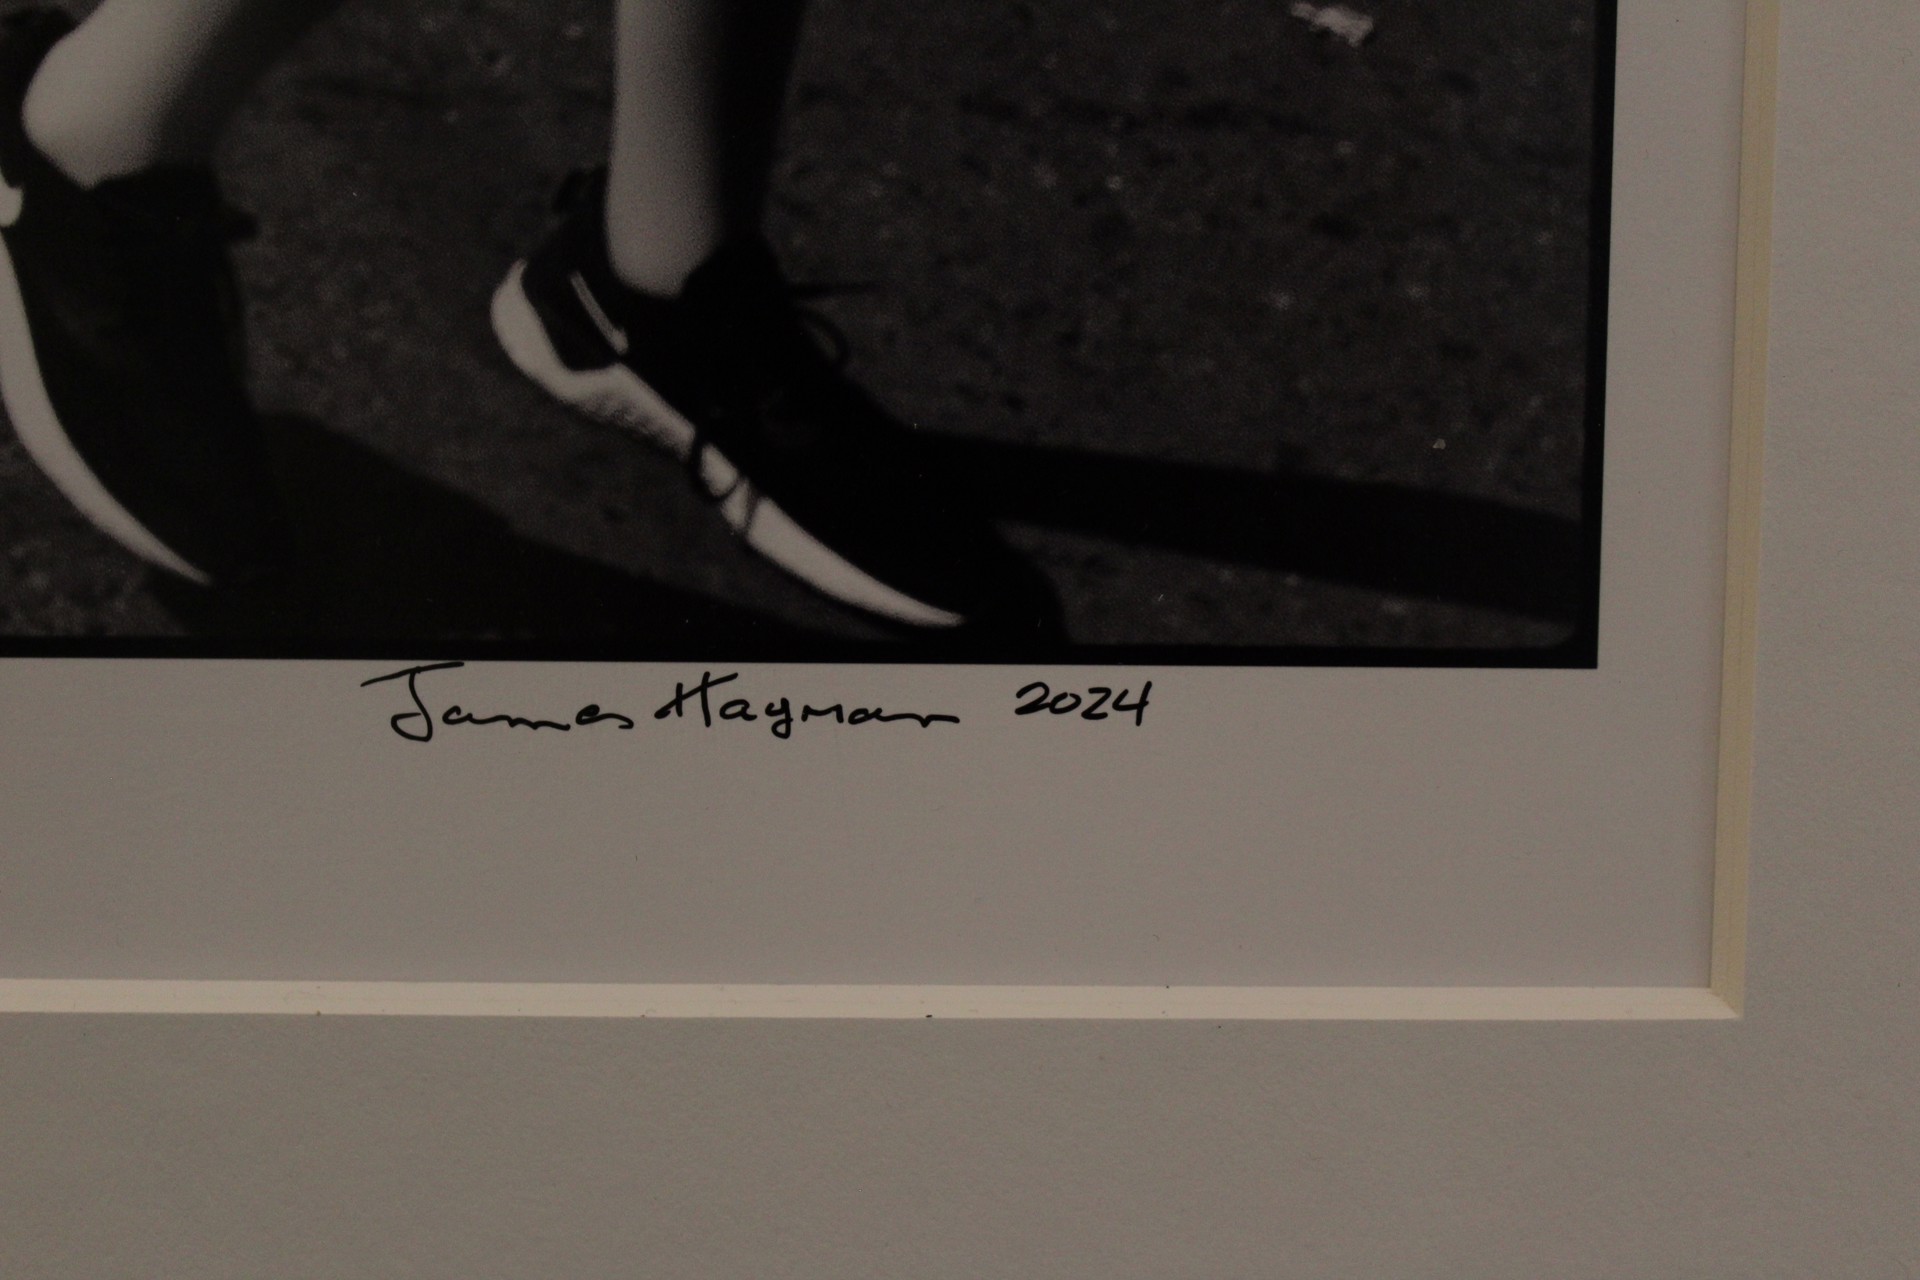 Majorette, Mardi Gras (framed) by James Hayman